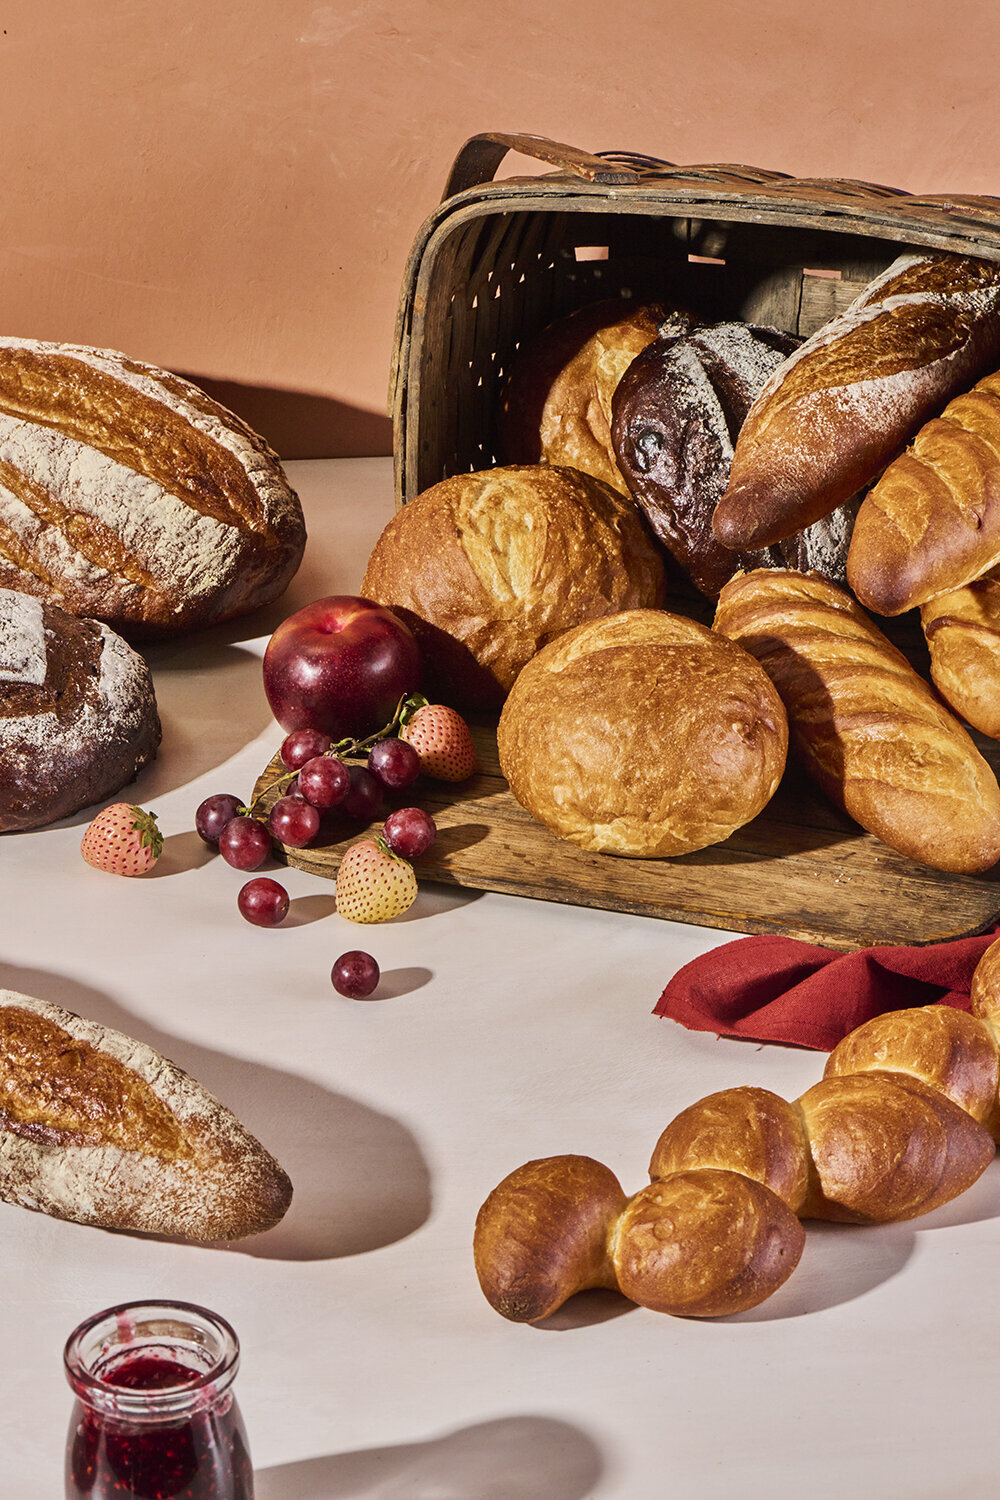 los-angeles-food-photographer-bakery-tous-les-jours-lindsay-kreighbaum-still-life-2